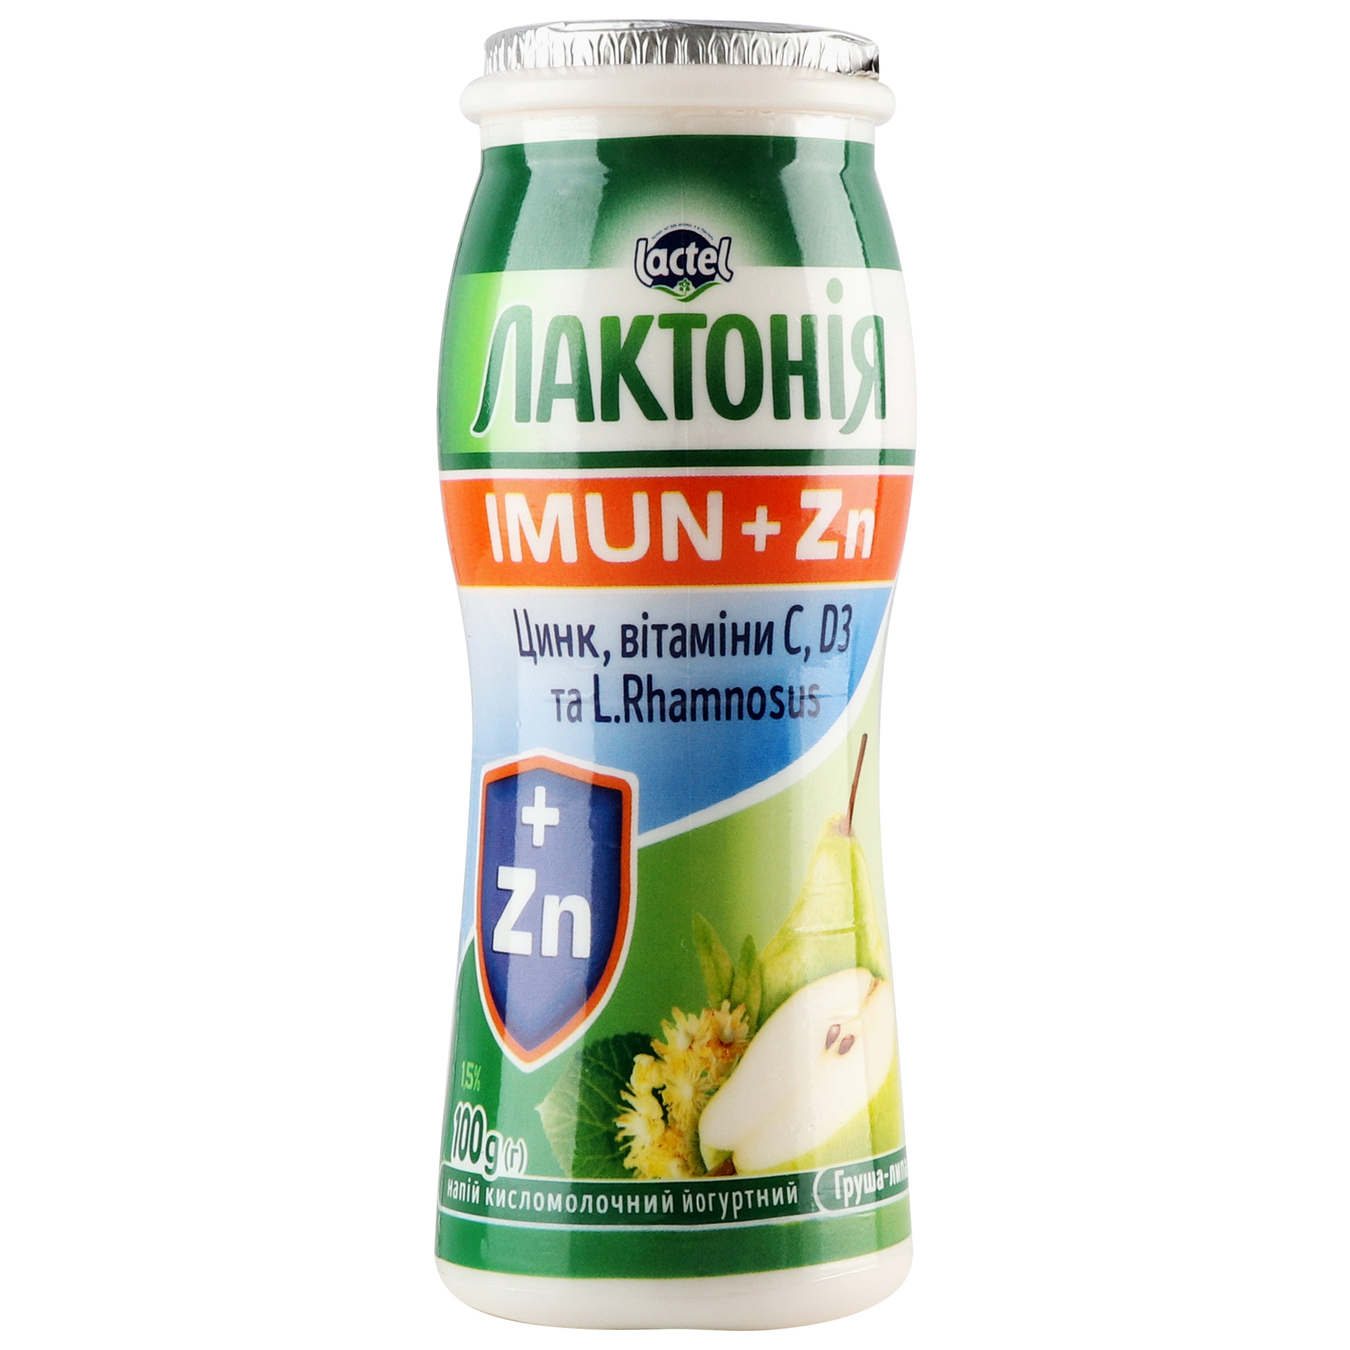 Drink Lactonia sour milk yogurt Imun + pear-linden 1.5% 100g bottle